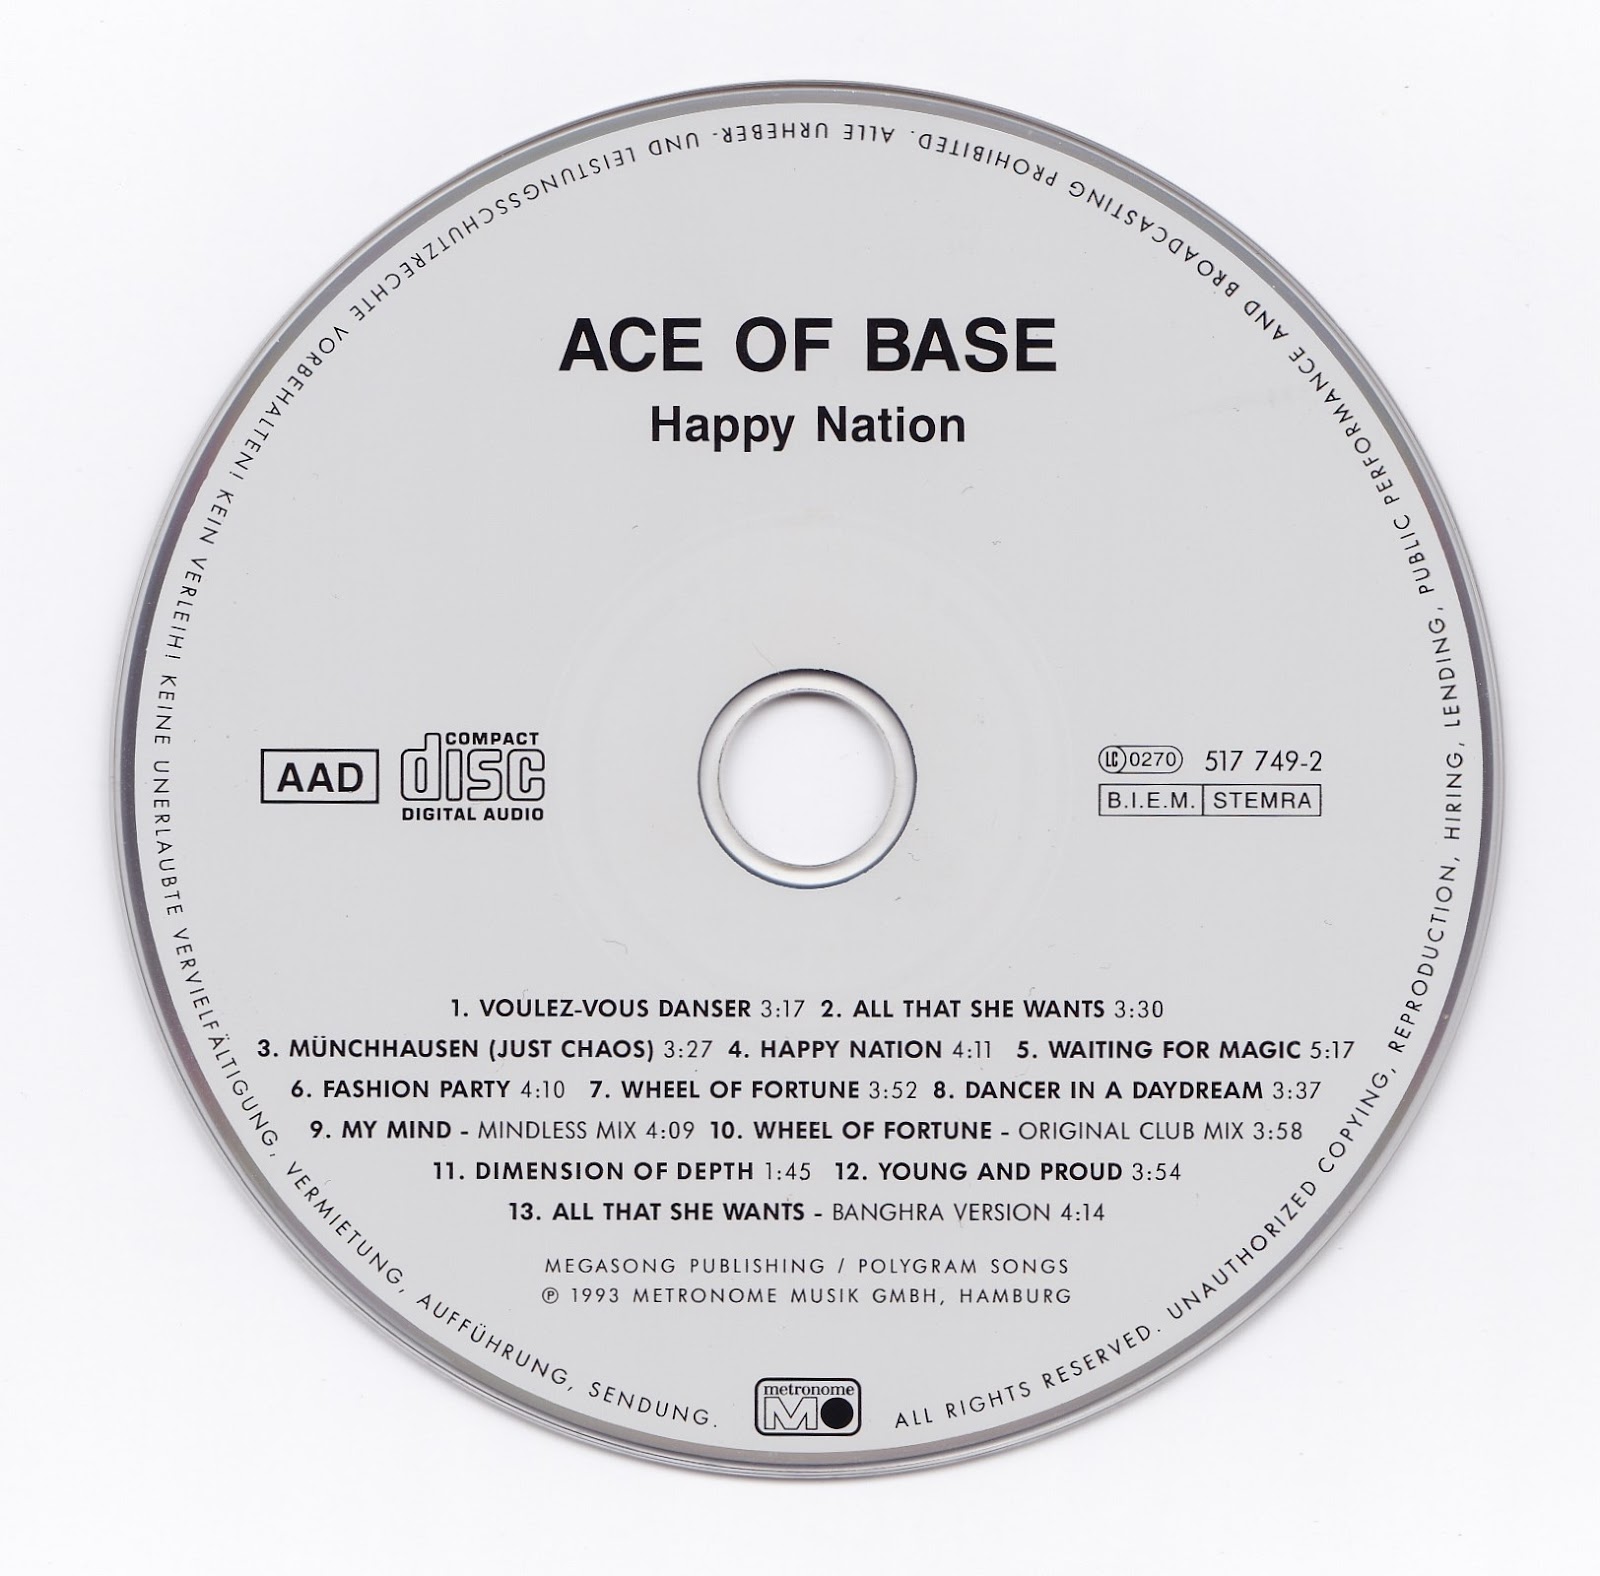 Happy nation год. Ace of Base 1992. Ace of Base Happy Nation. Ace of Base 1993 Happy Nation. Young and proud Ace of Base.